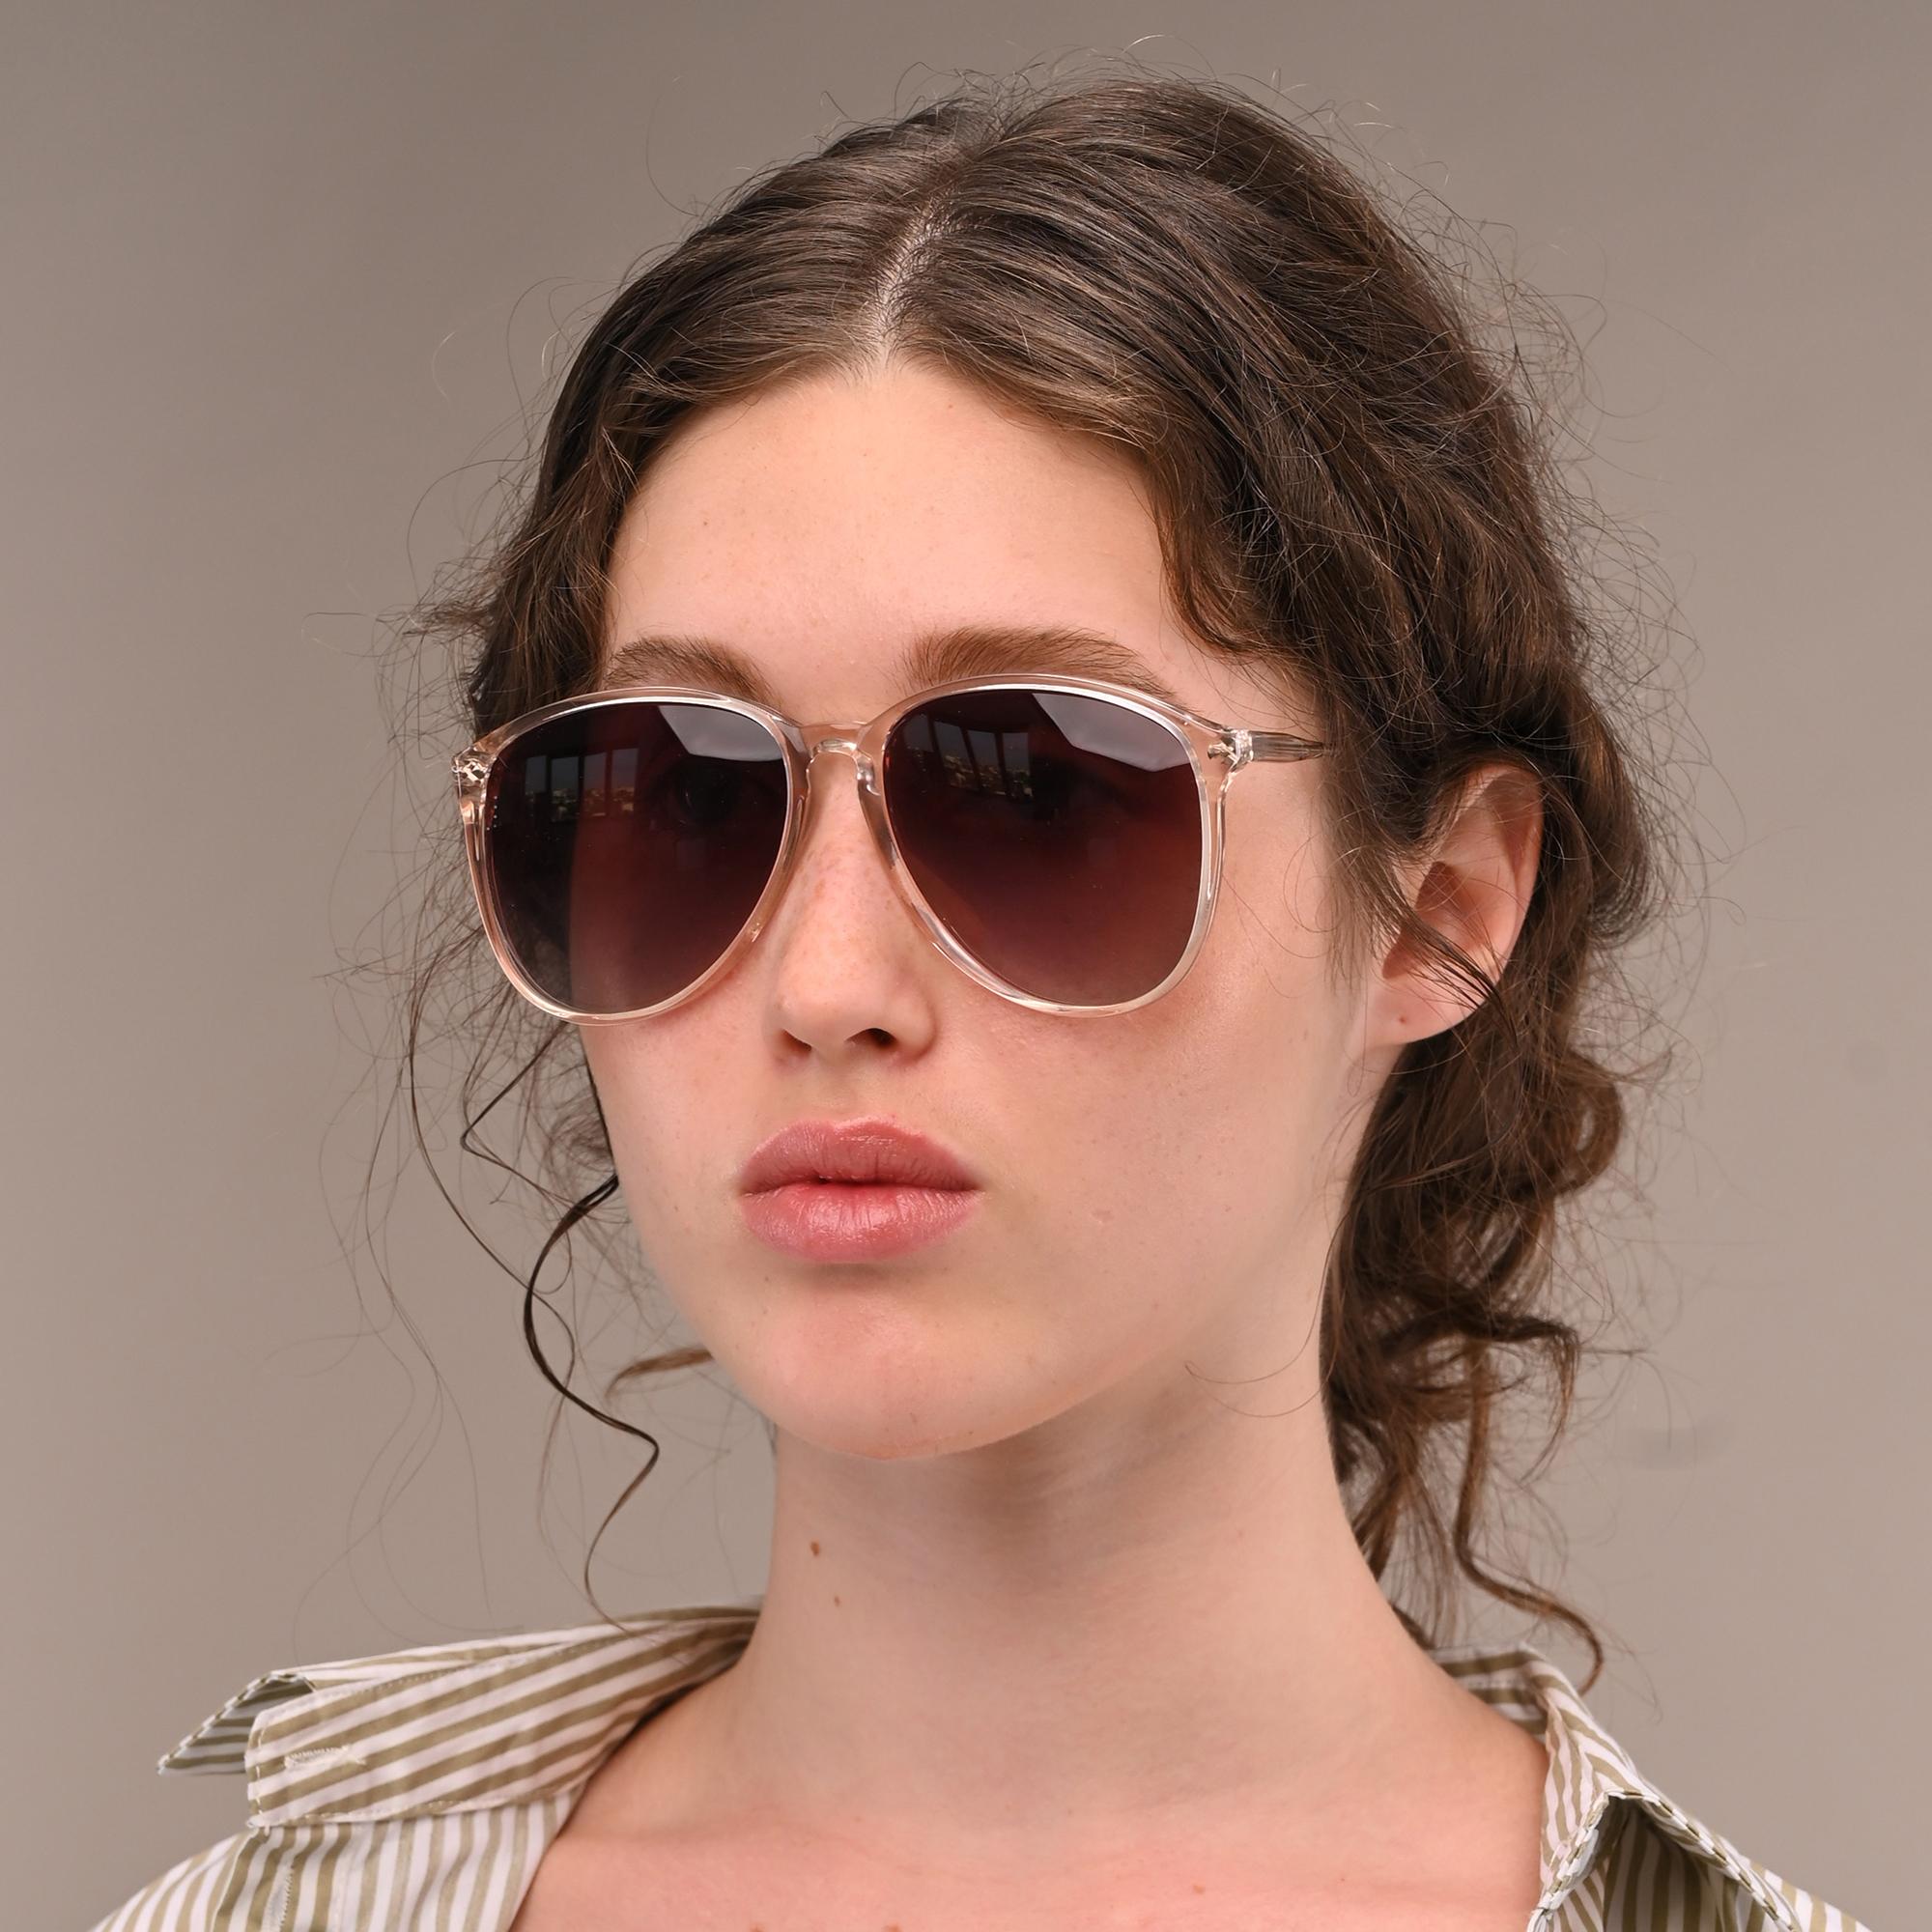 Argos vintage sunglasses, France 70s For Sale 2